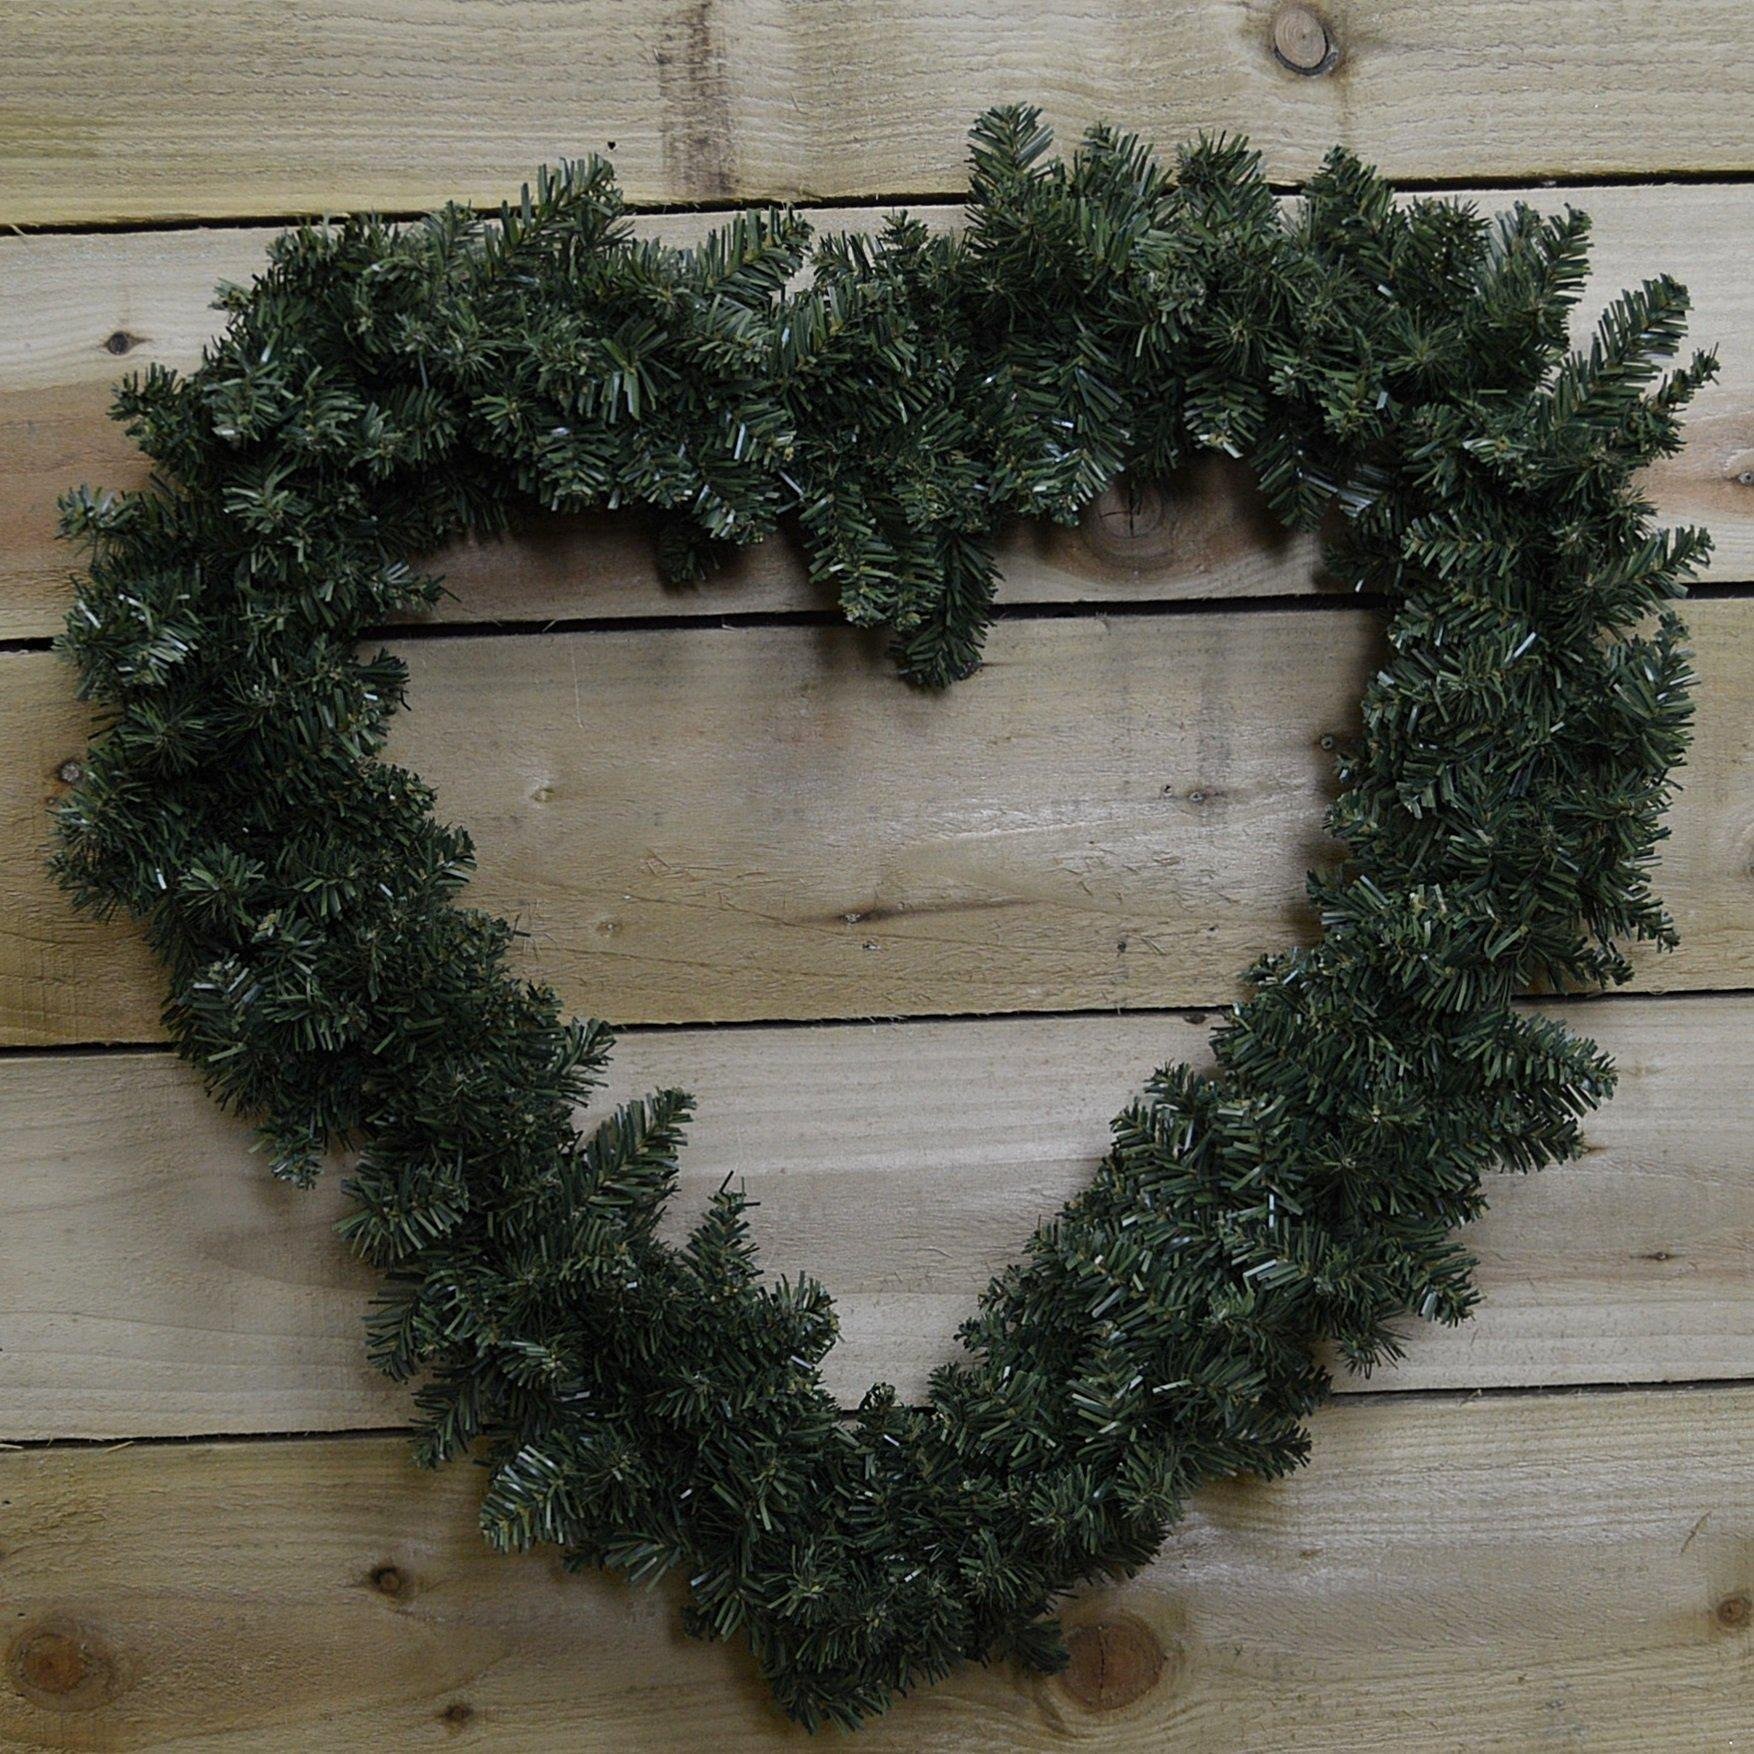 50cm x 55cm Luxury Heart Shaped Pine Christmas Door Wreath in Plain Green - image 1